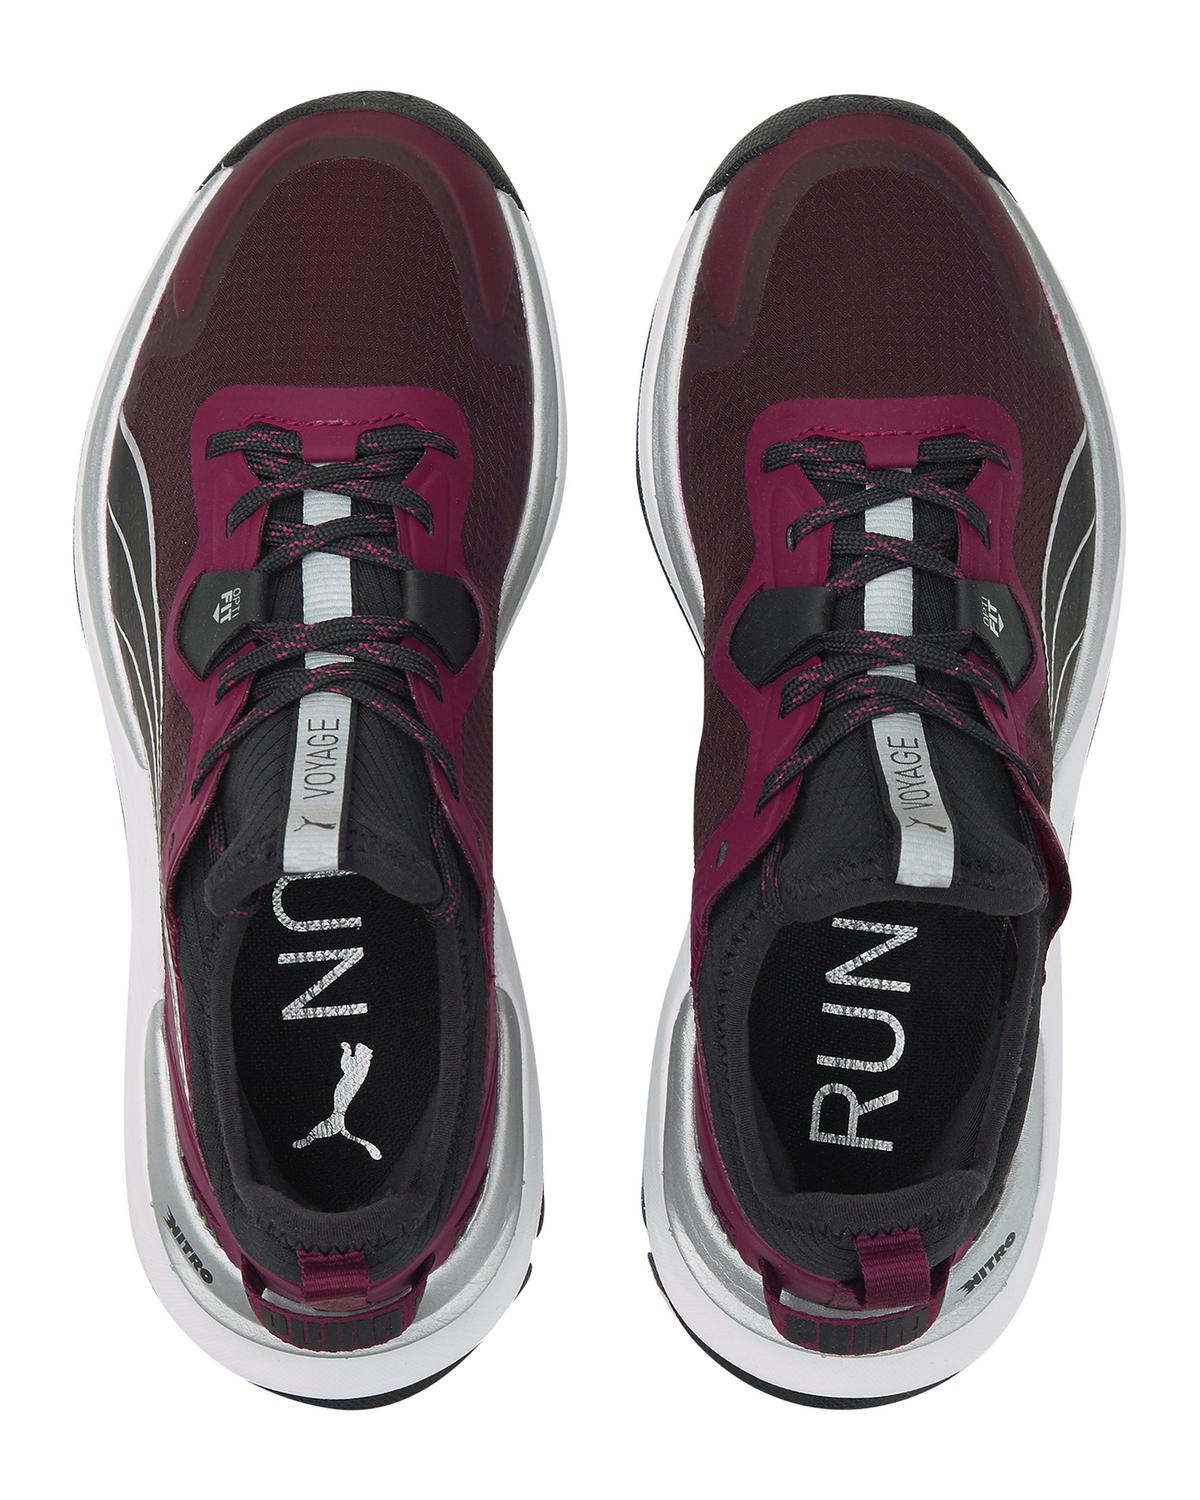 PUMA Women’s Voyage Nitro Trail Running Shoes -  Grape